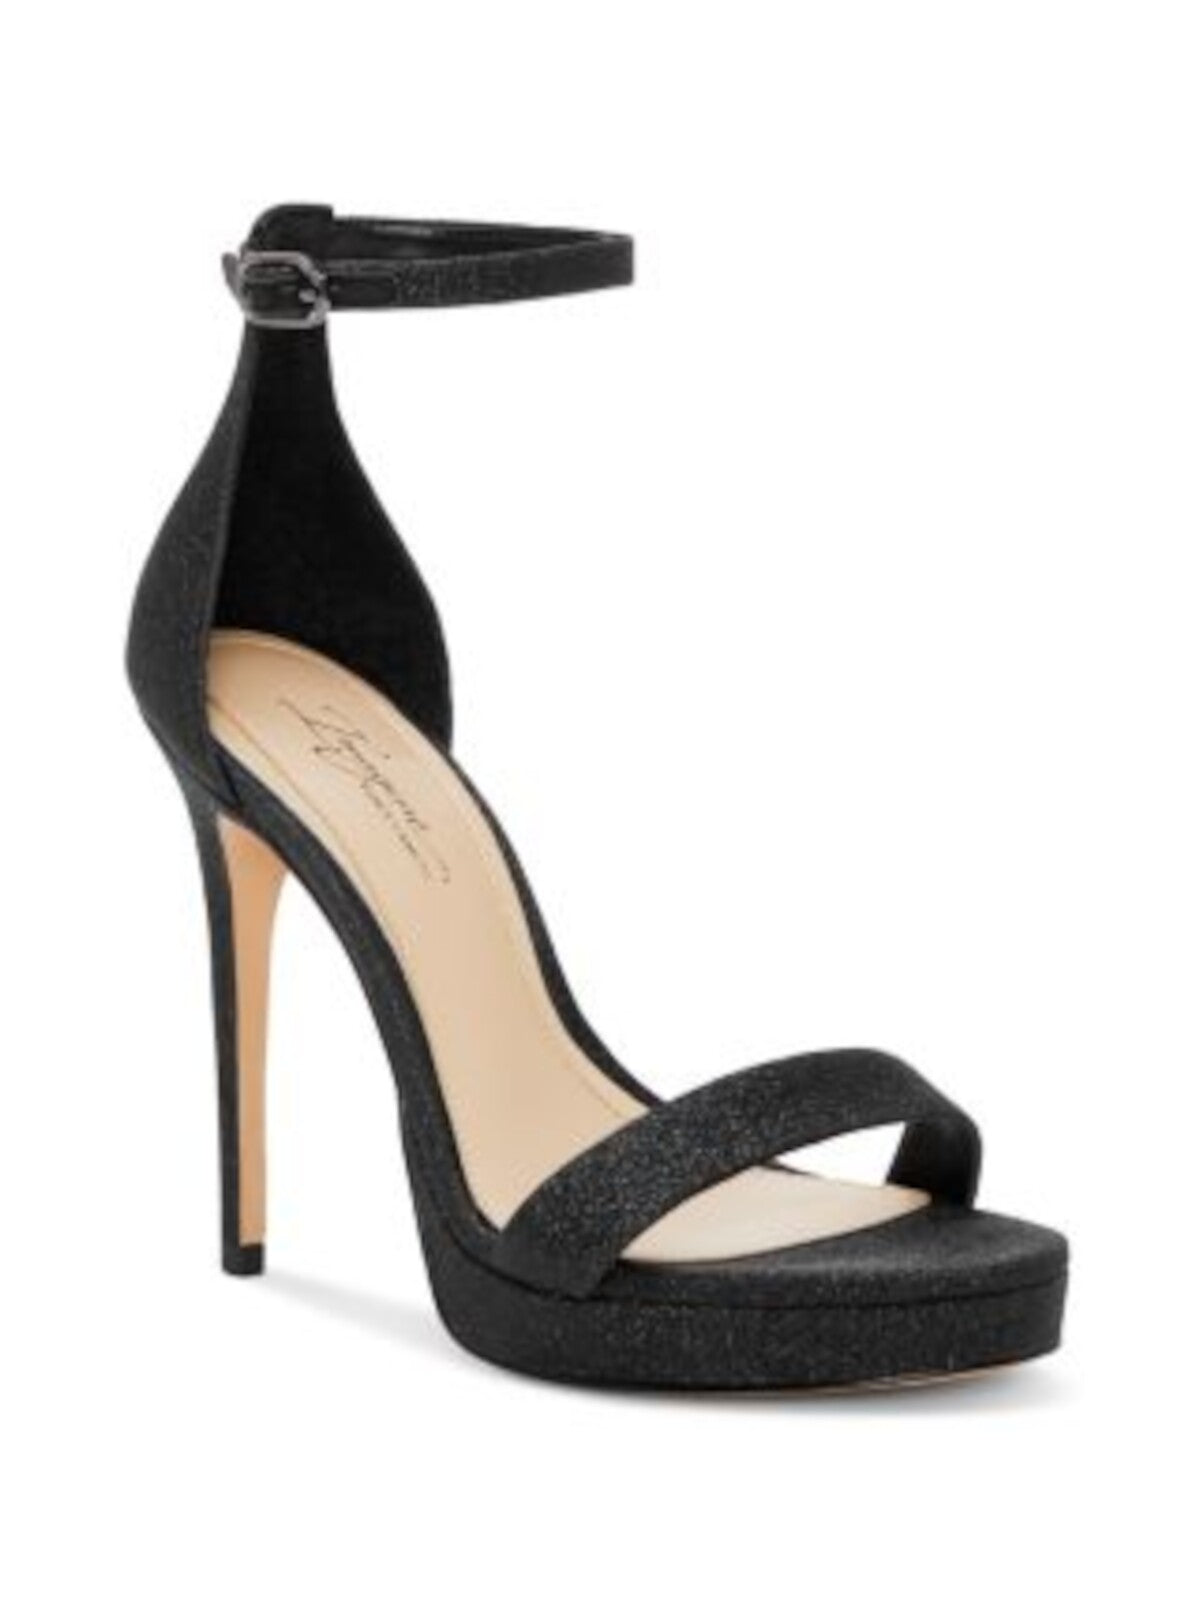 VINCE CAMUTO Womens Black 1" Platform Ankle Strap Glitter Preslyn Round Toe Stiletto Buckle Dress Sandals Shoes 10 M